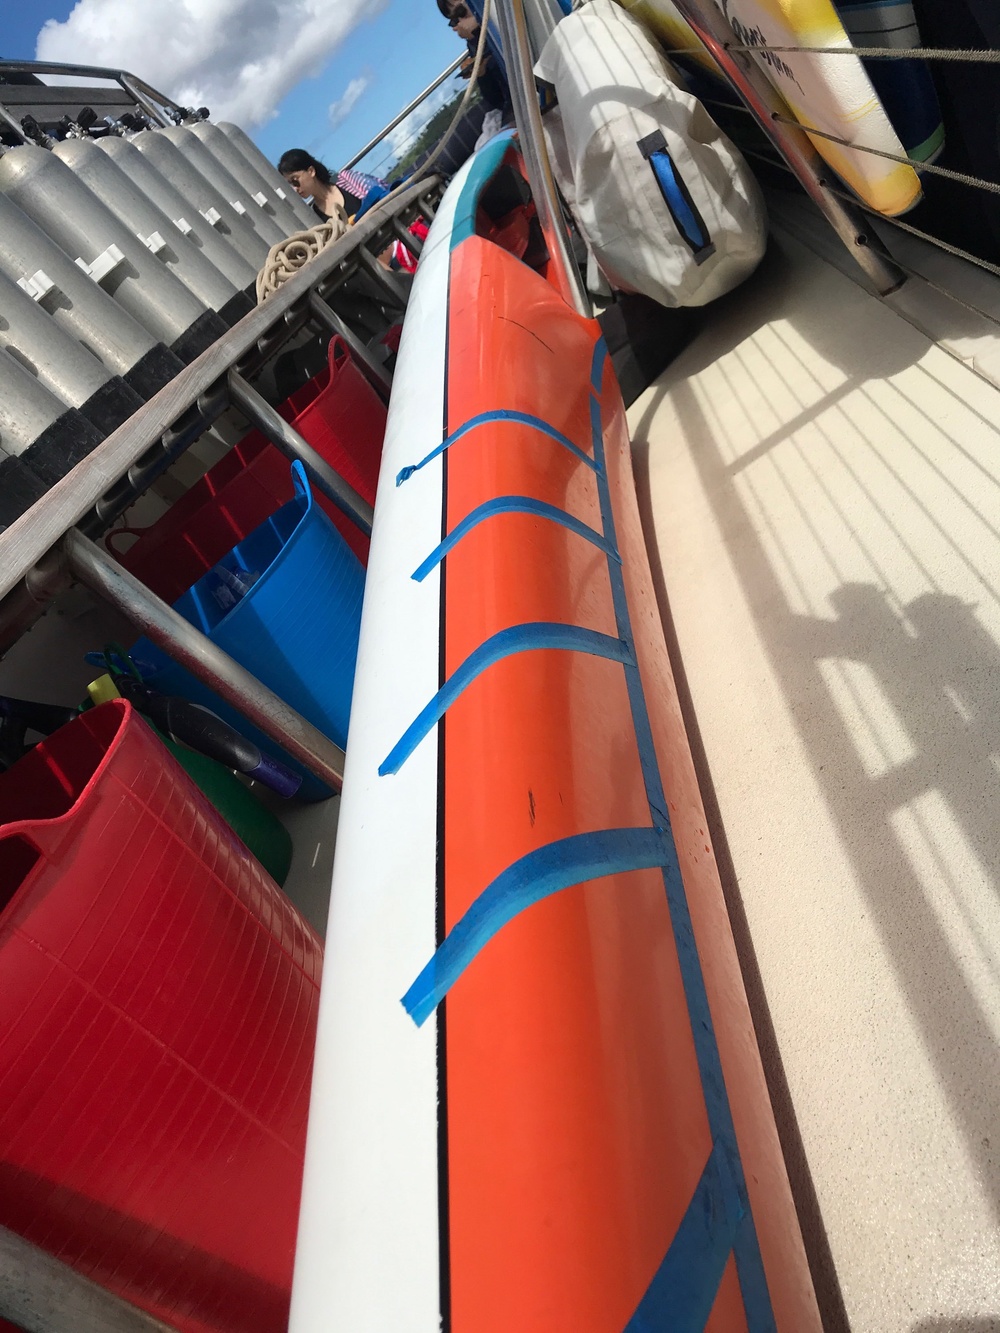 Imagery Available: Coast Guard seeks public's help identifying canoe owner near Makena, Maui